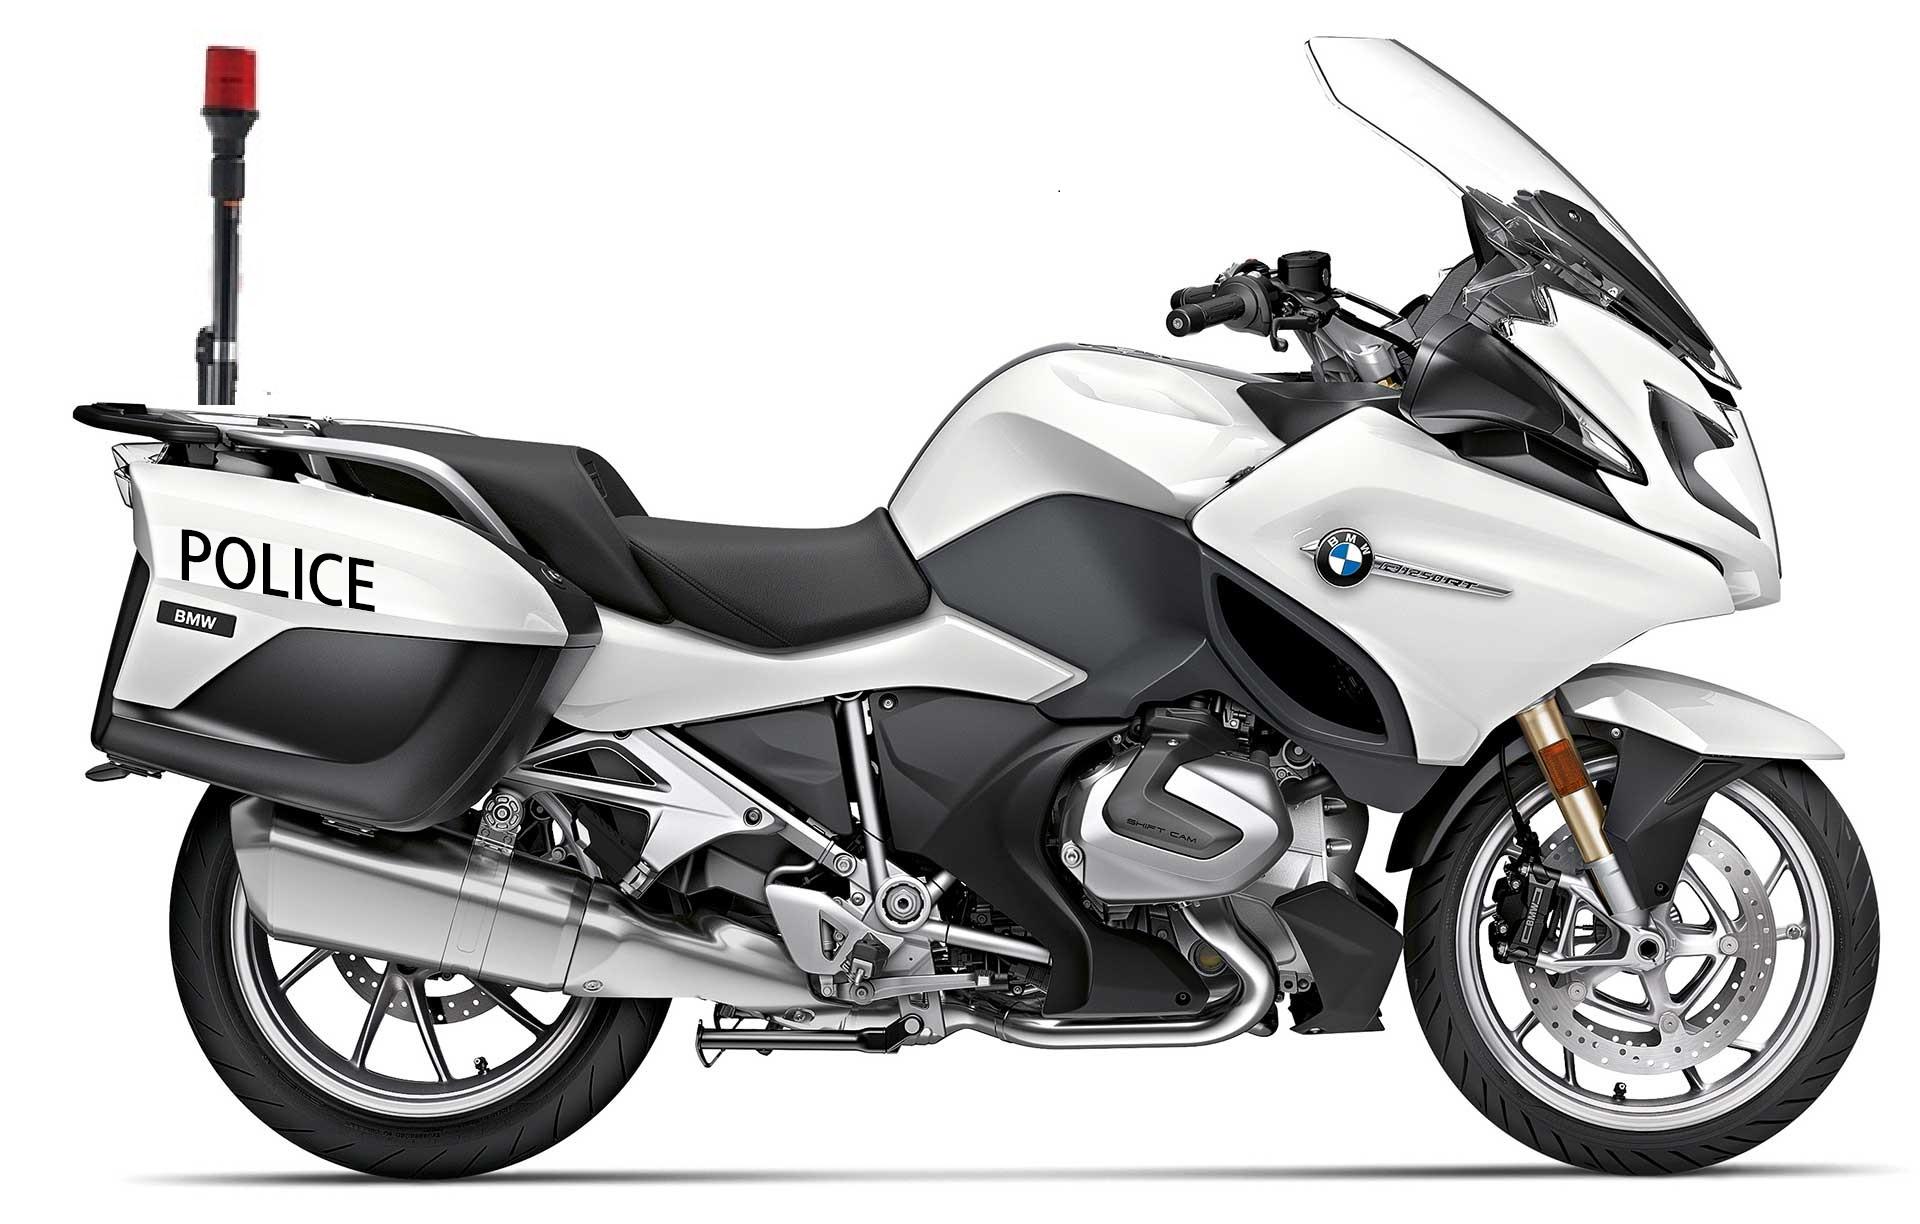 Bảng giá BMW Motorrad đầu tháng 32021  CafeAutoVn